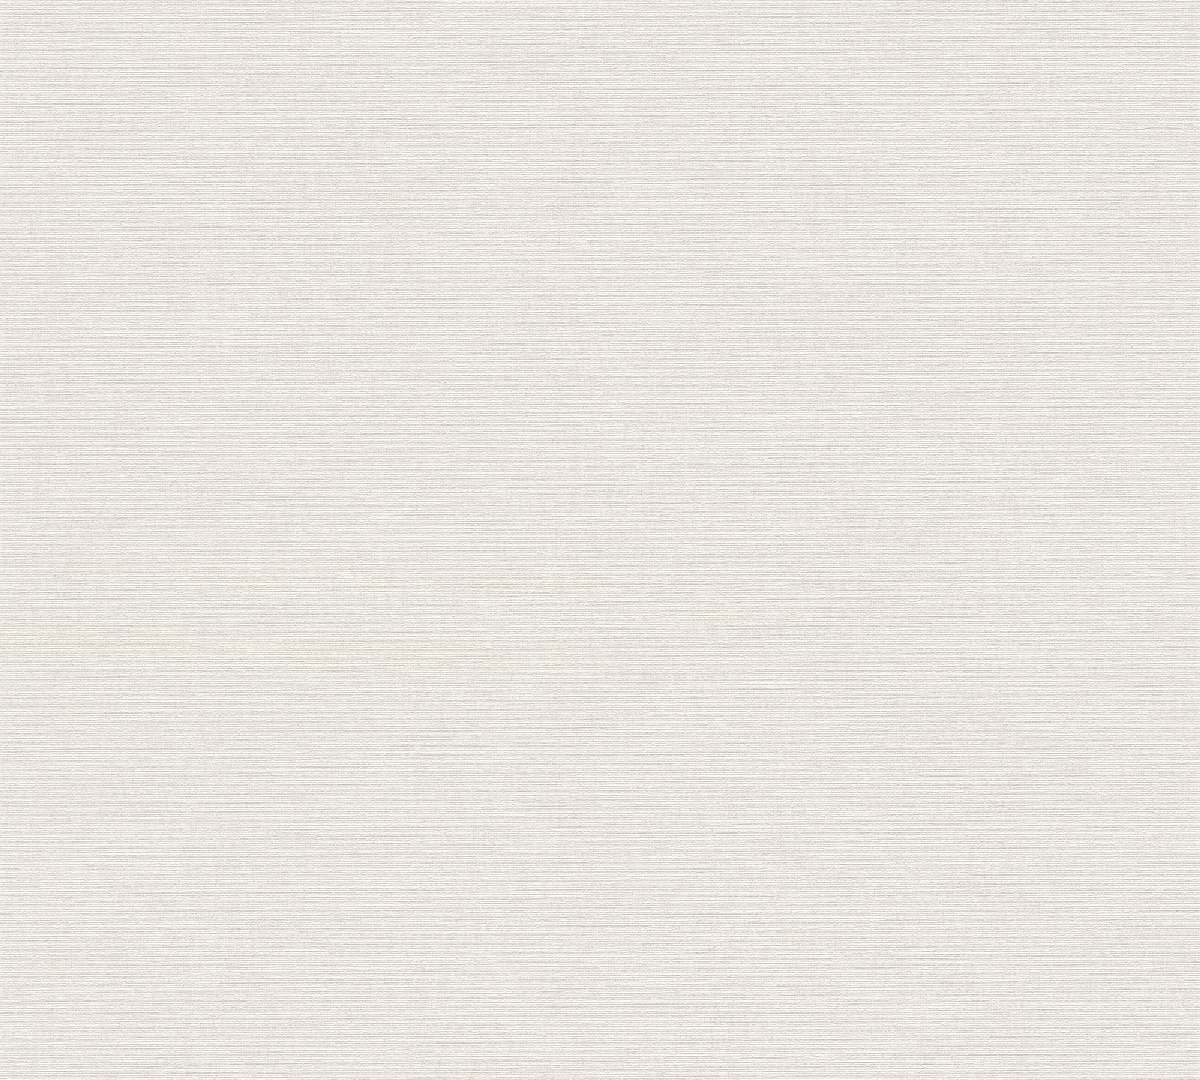 Vliestapete House of Turnowsky 389043 - einfarbige Tapete Muster – Weiß. Creme